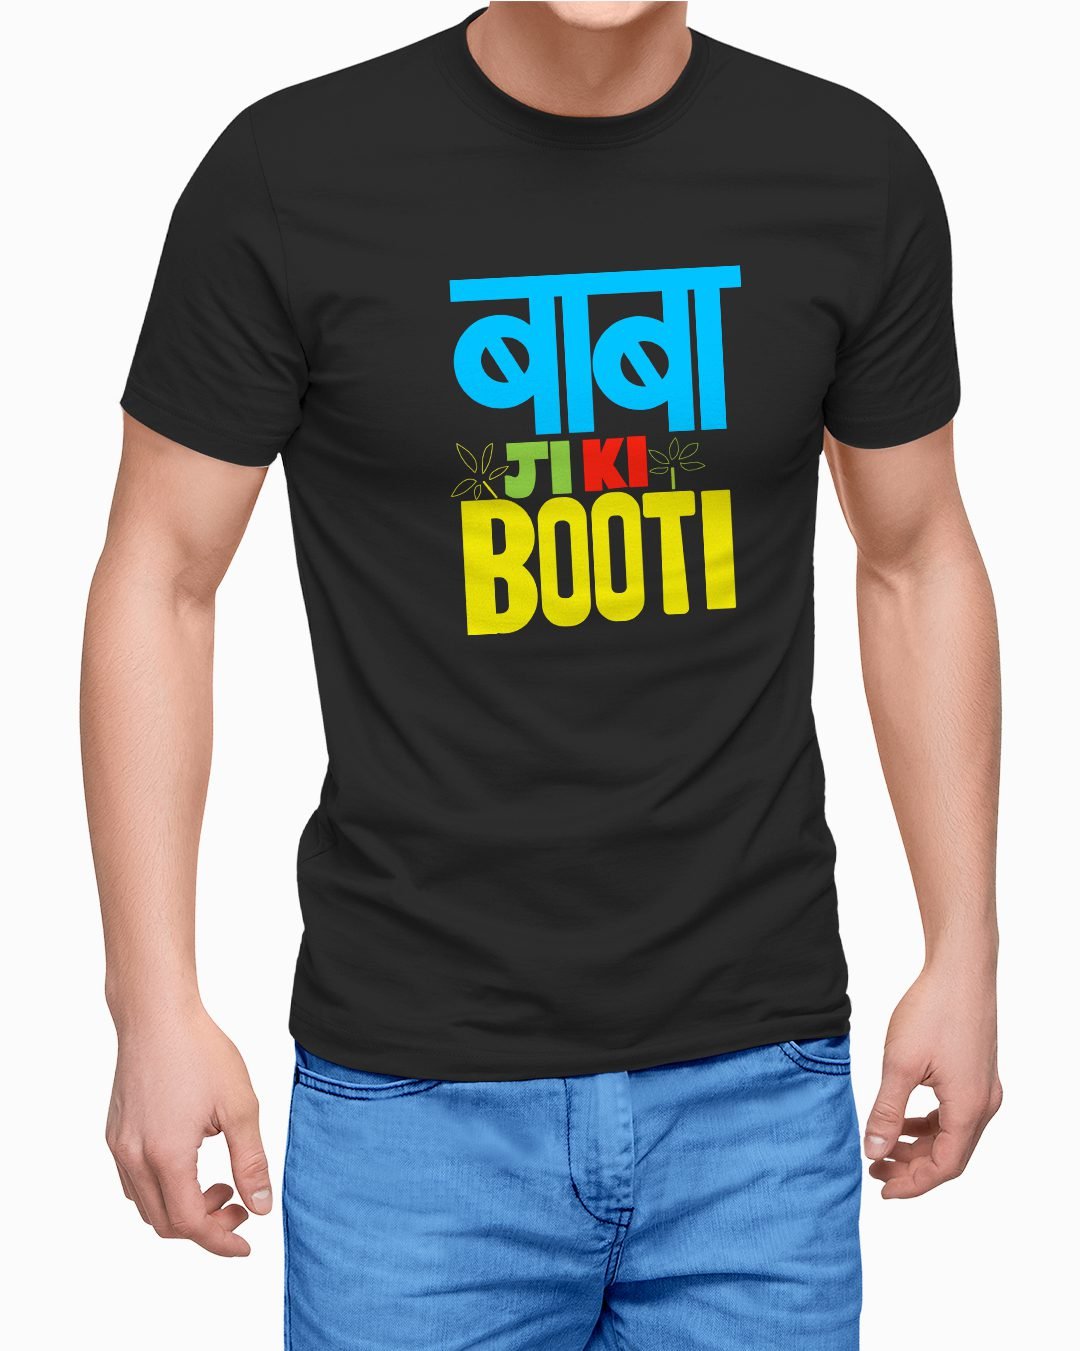 Baba Ji Ki Booti Printed T-Shirt